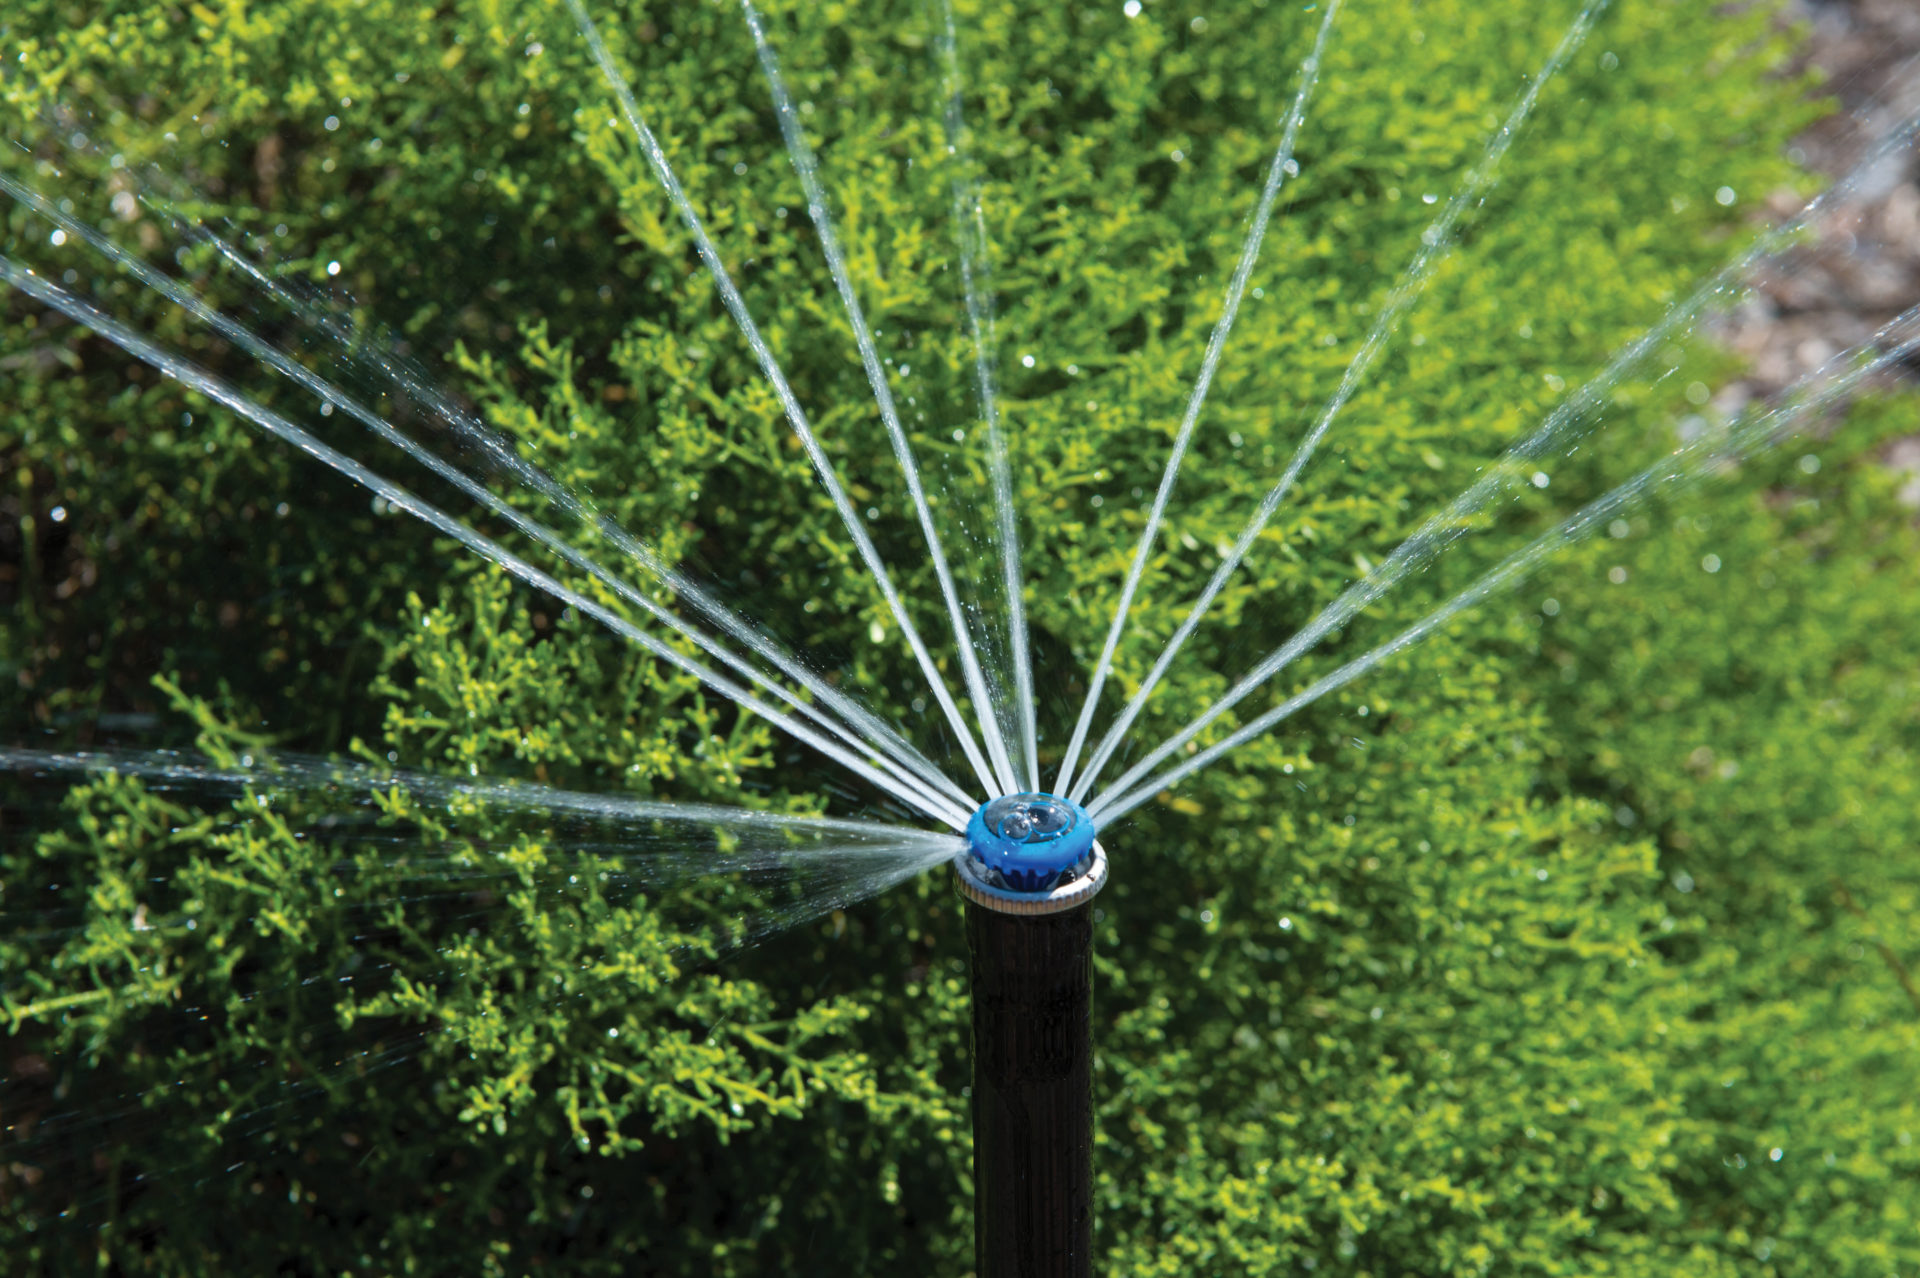 Sprinkler system service Sprinkler system repair service in Olathe, Overland Park, Lenexa, Lee’s Summit, Parkville, Wichita, Topeka Kansas City